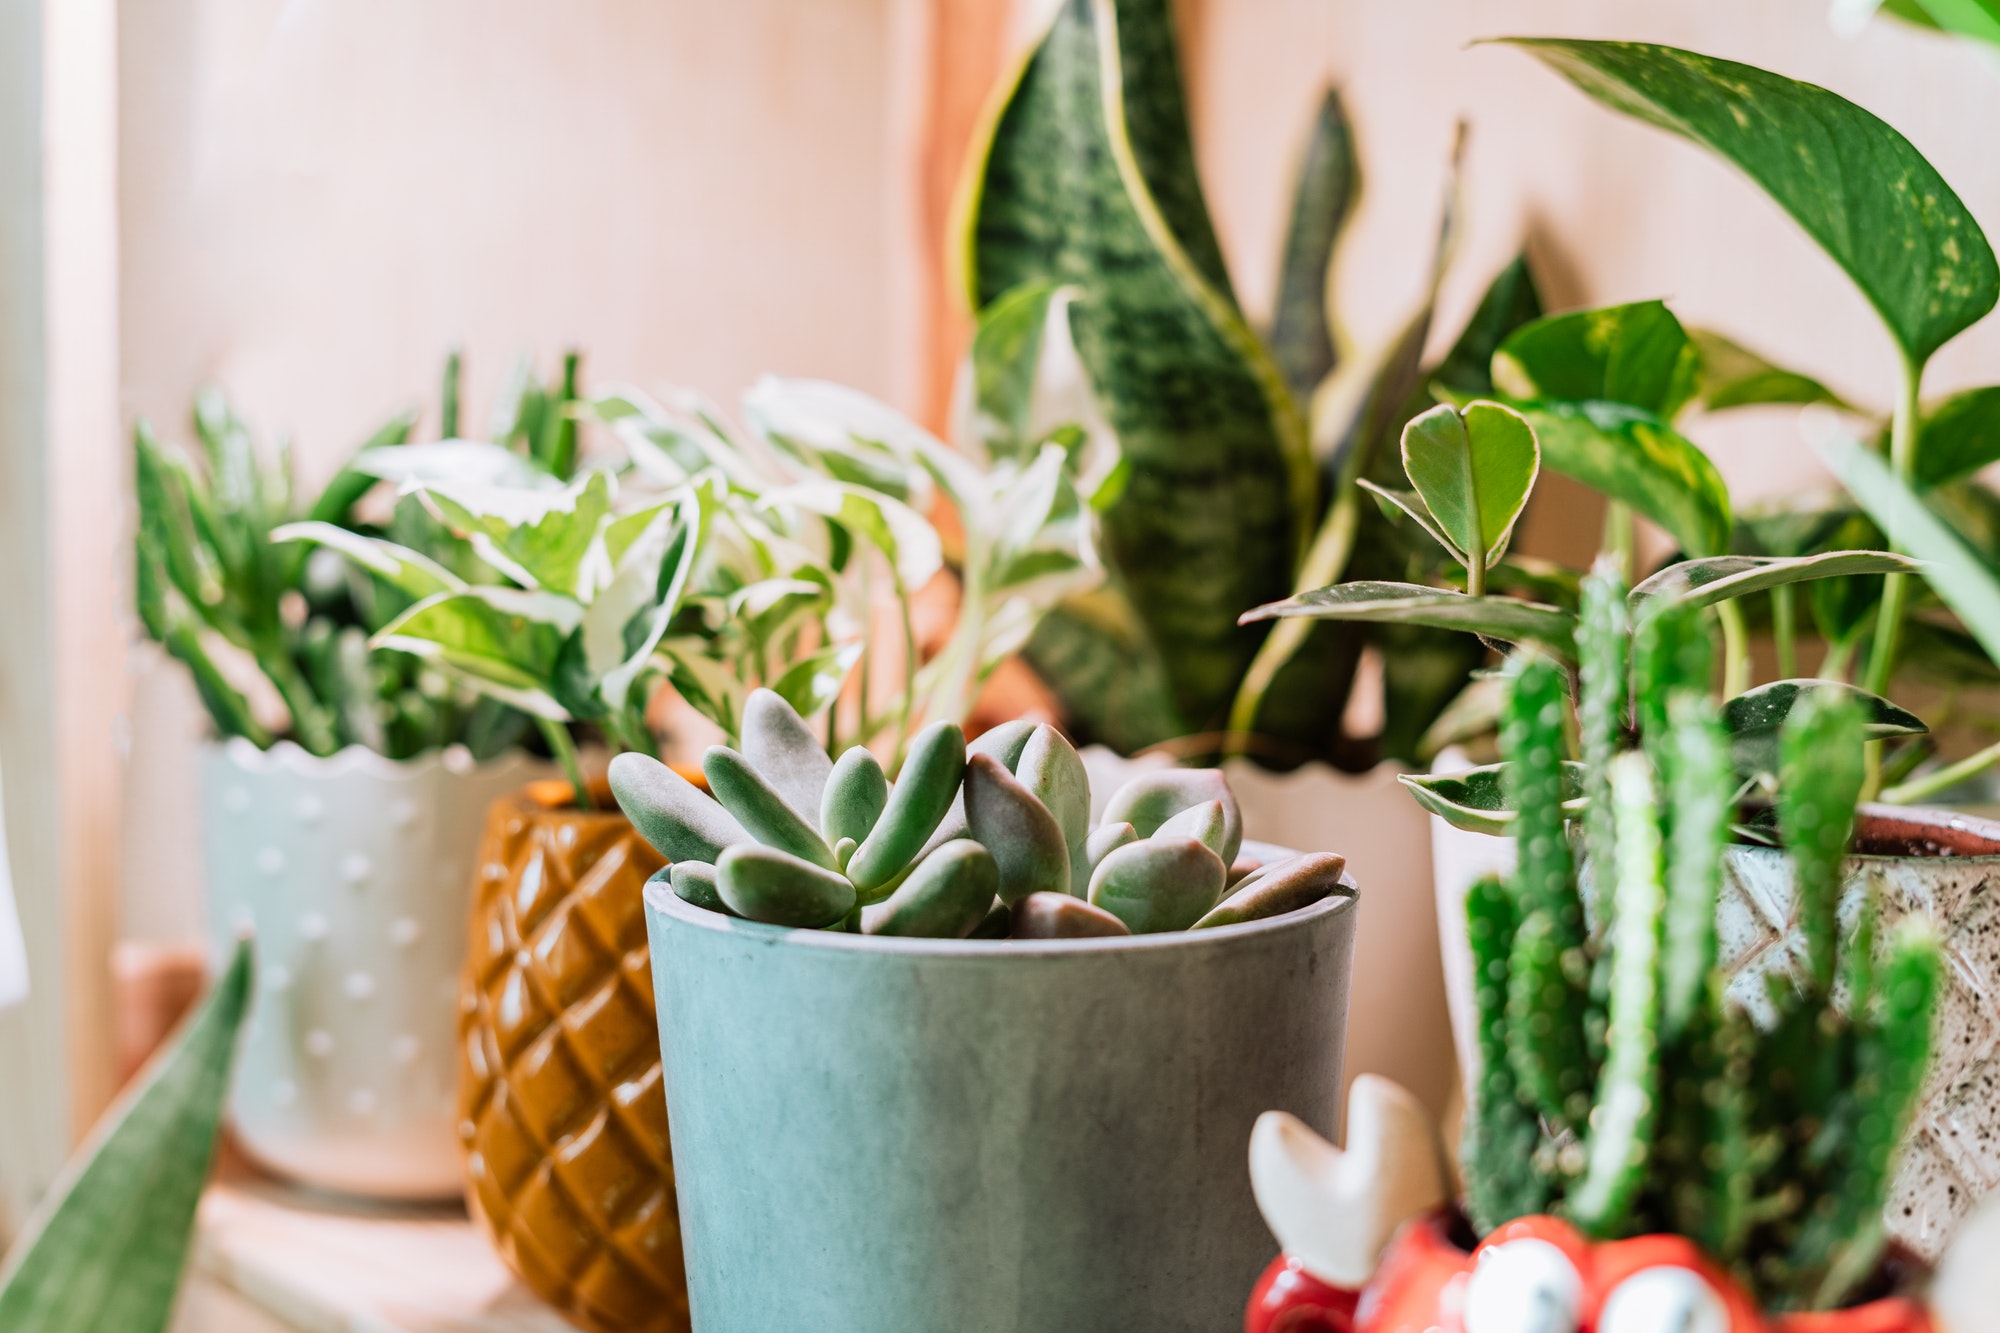 Home gardening. Indoor plants in ceramic pots. Cactus and succulents.